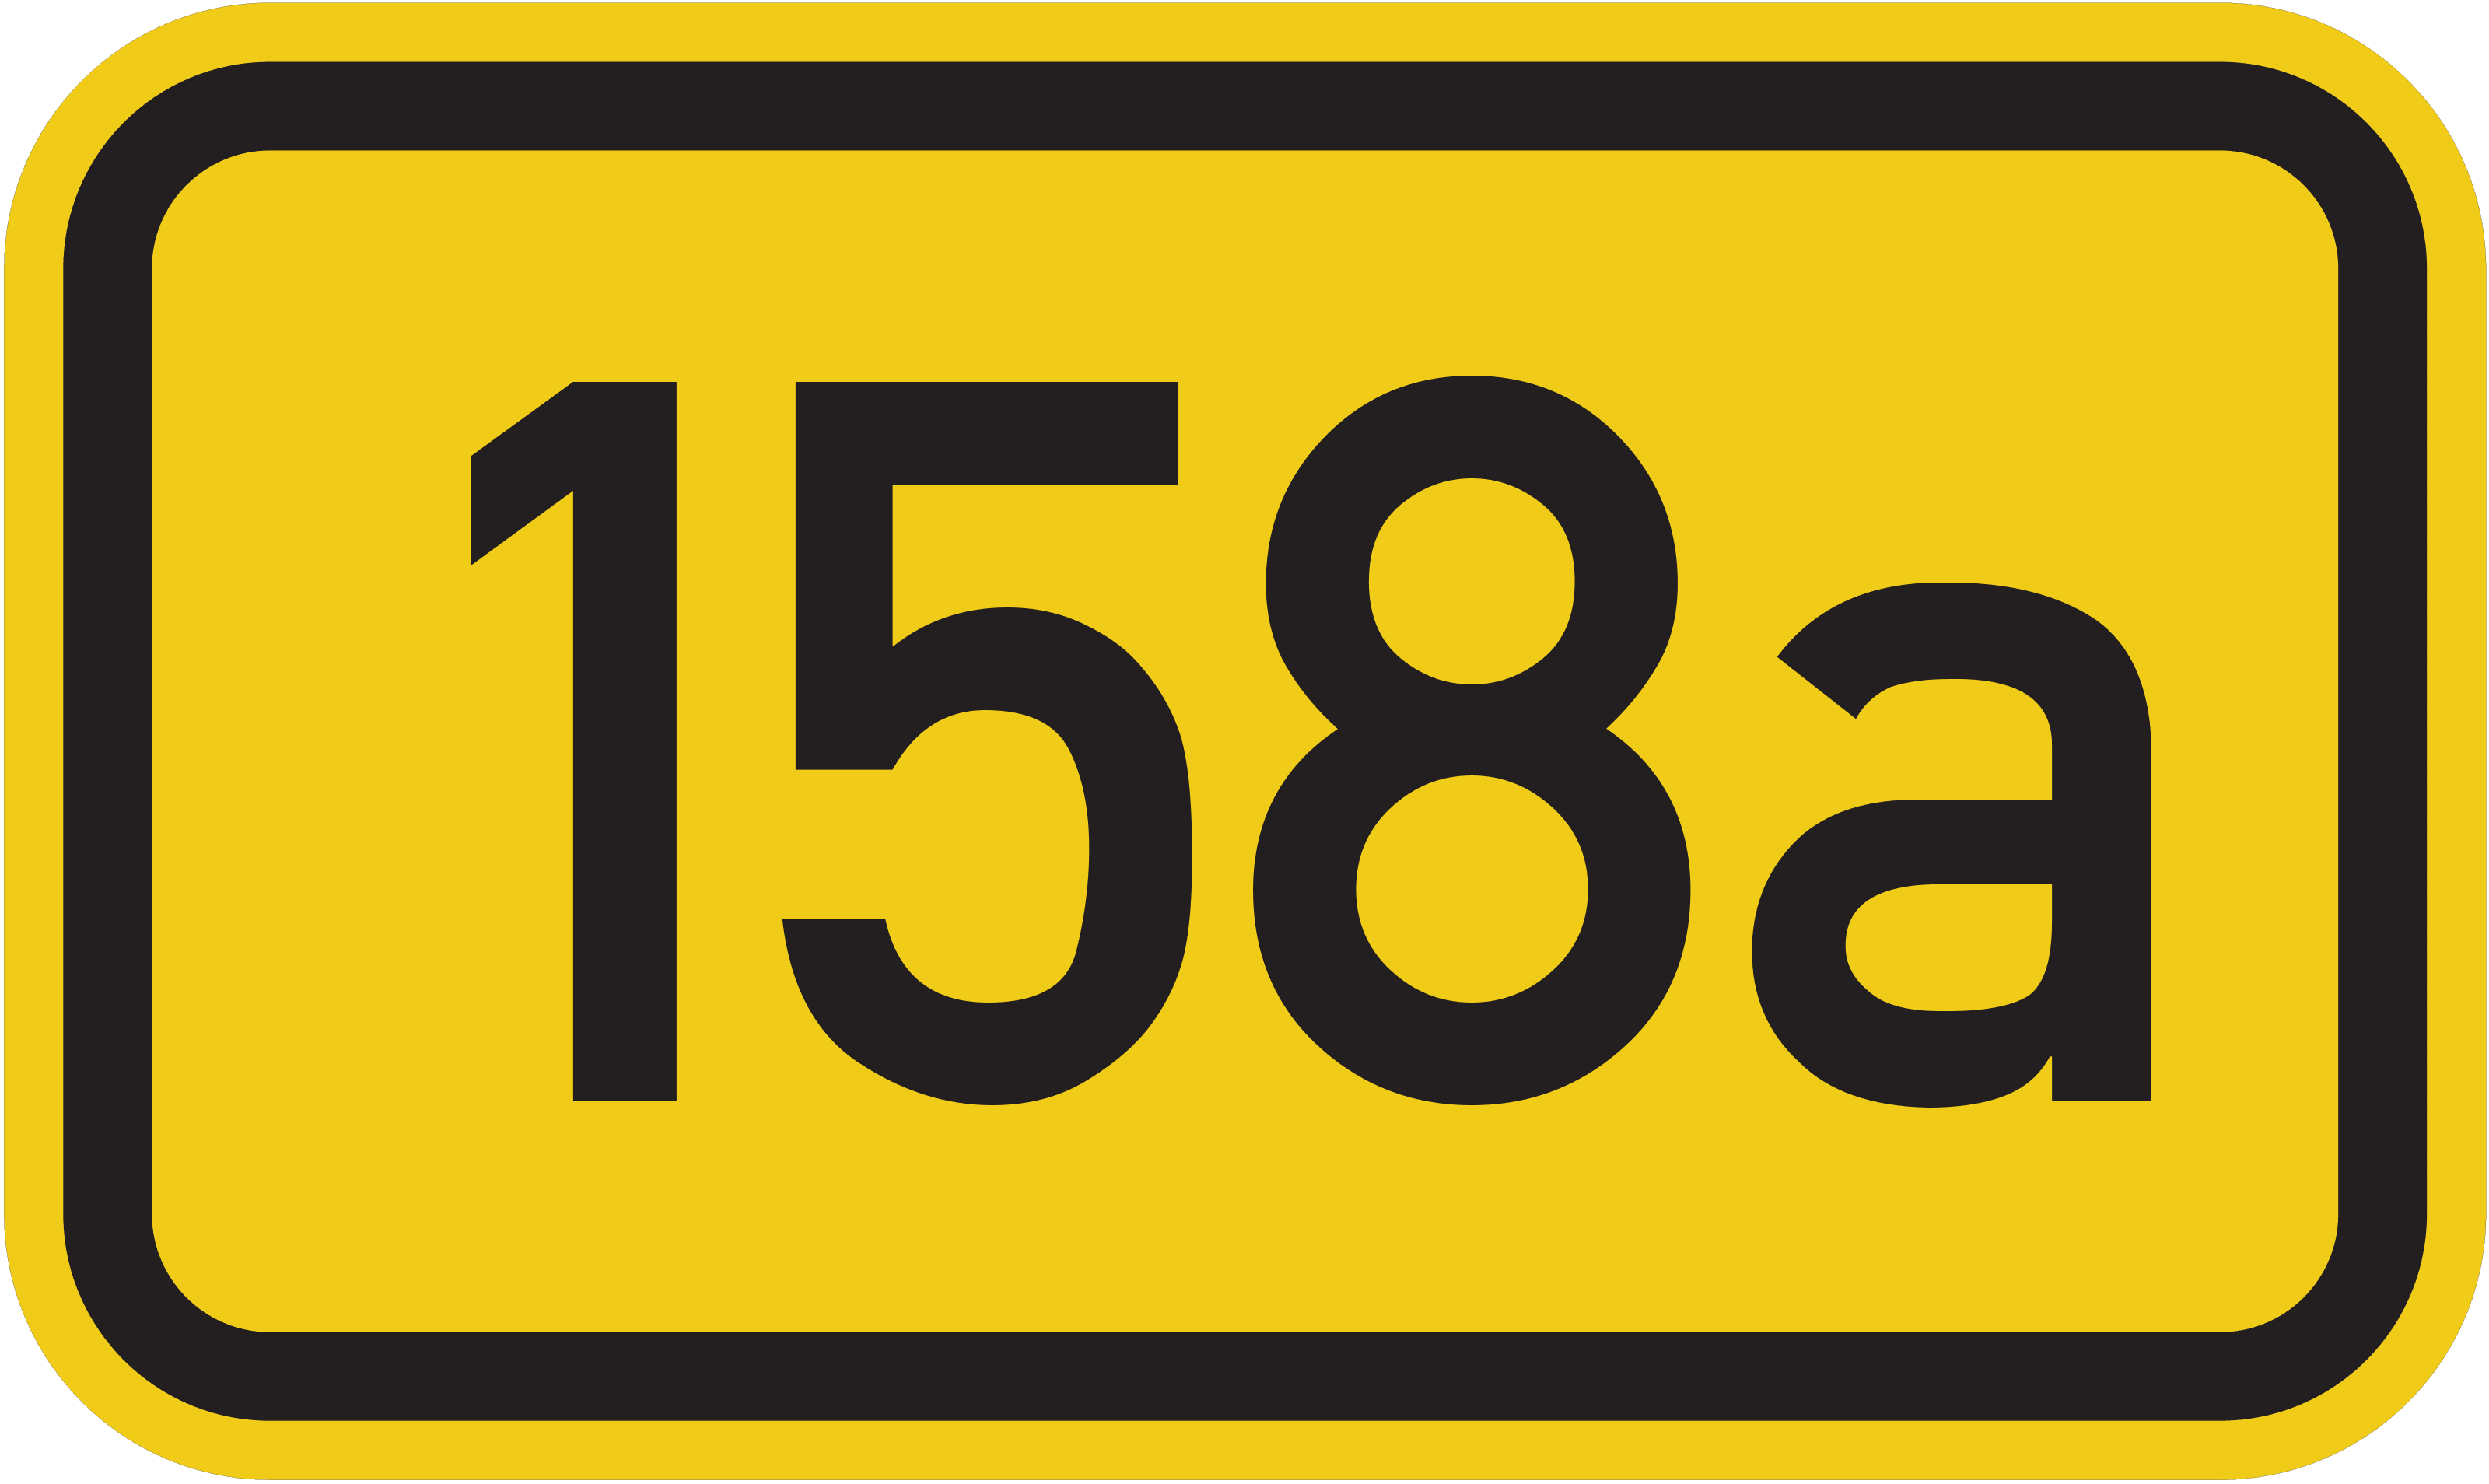 Straßenschild Bundesstraße 158a